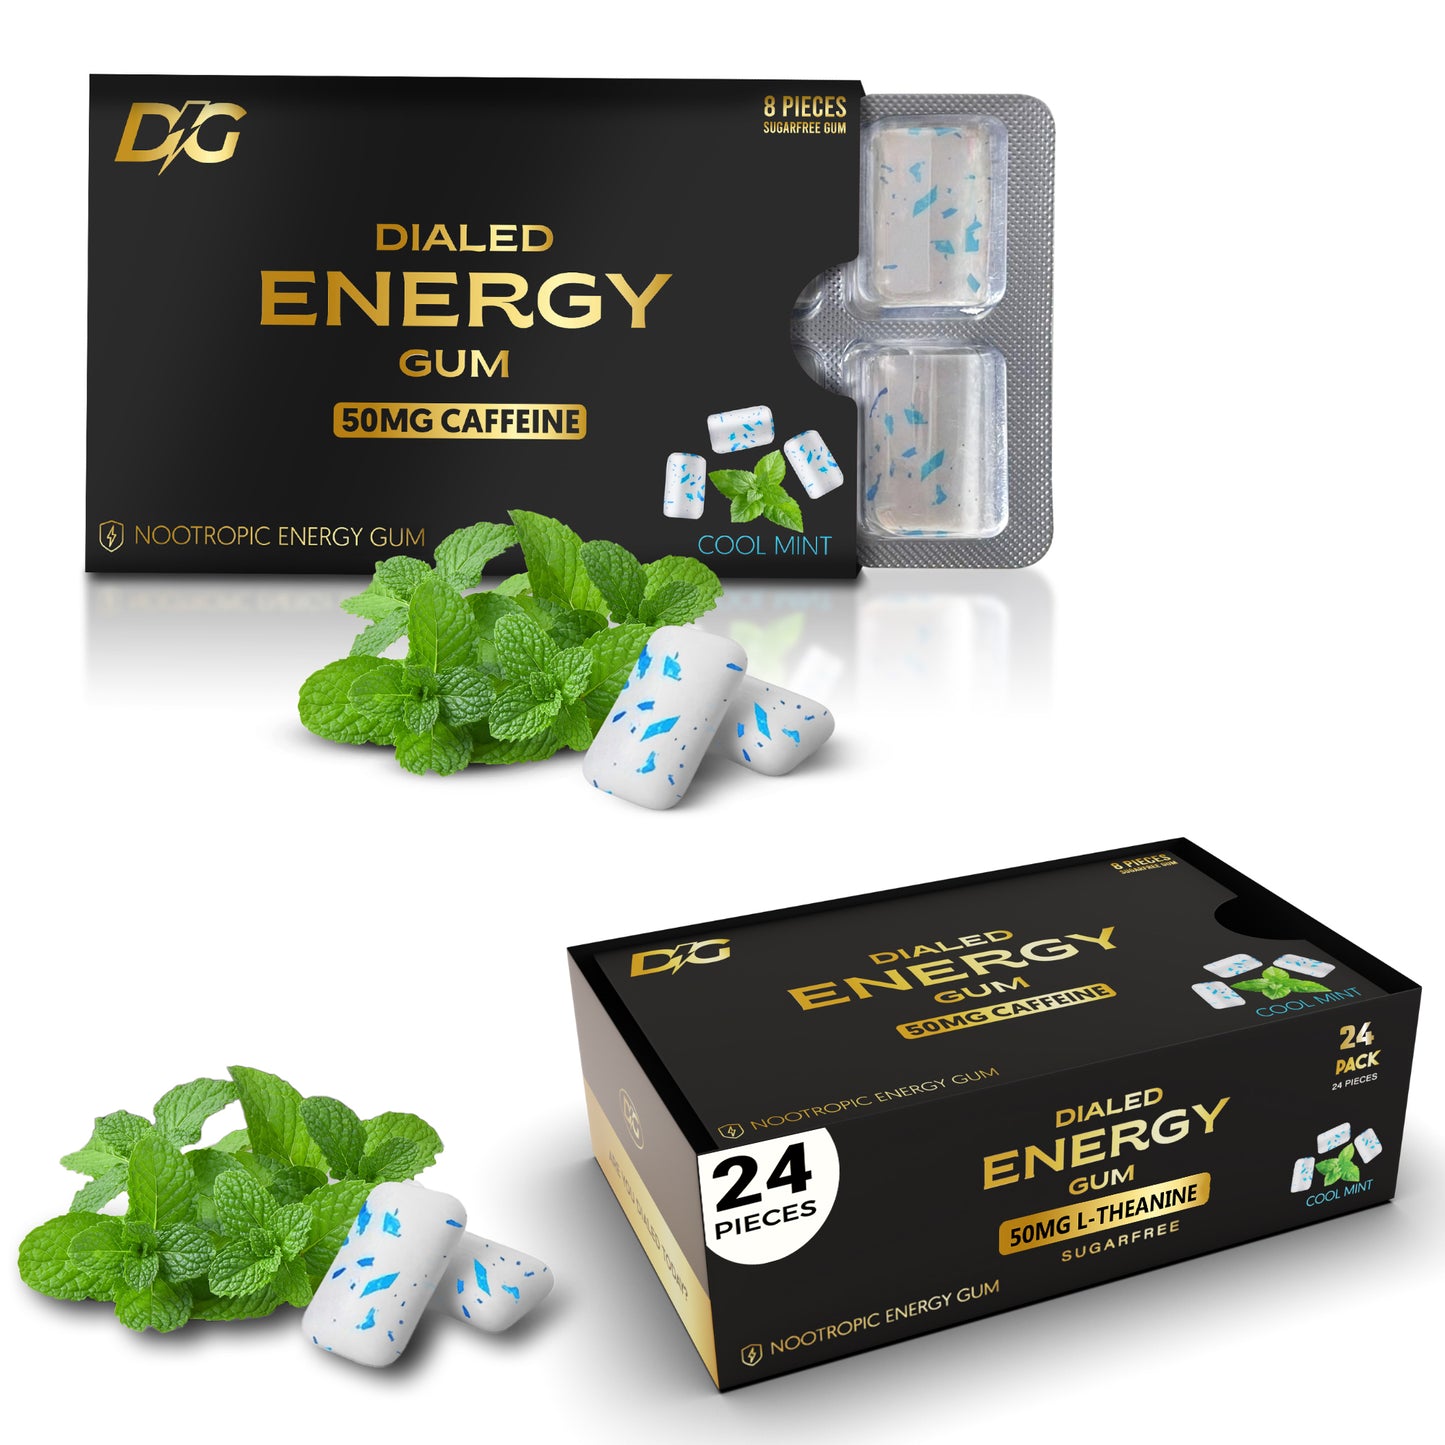 Dialed Energy Gum